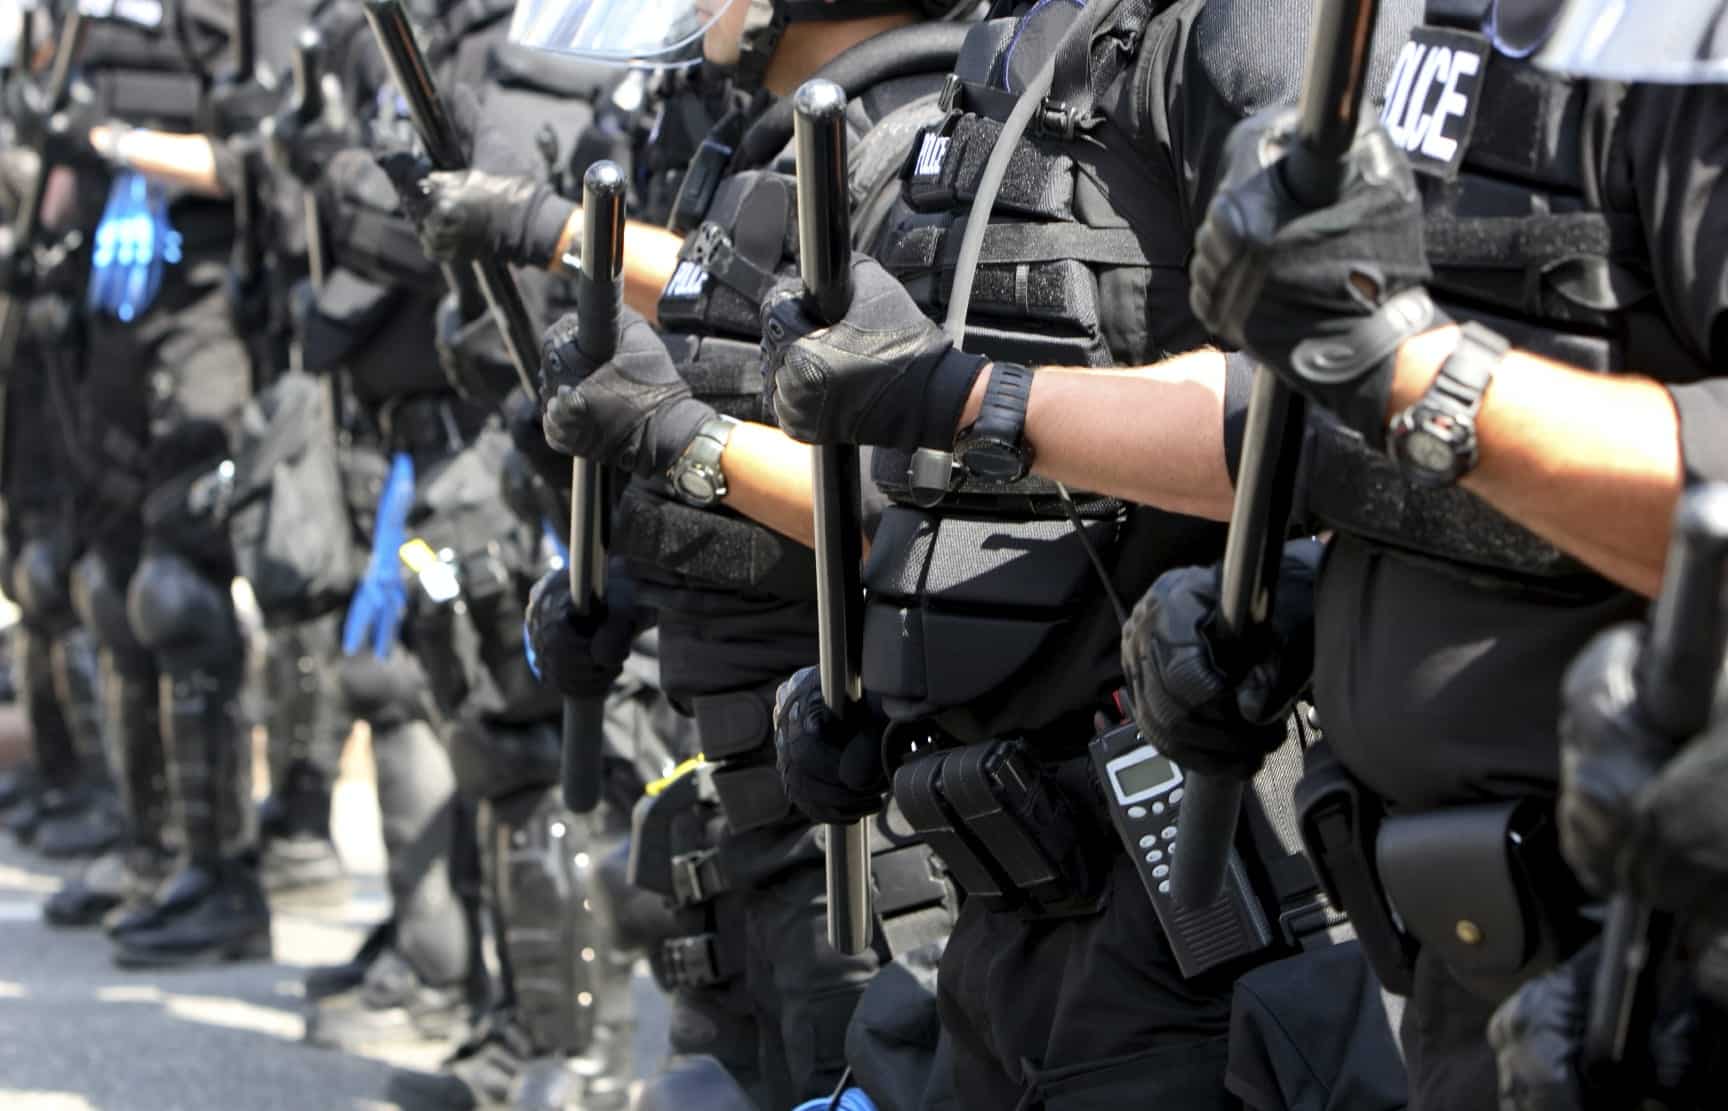 DOJ Report Blasting Baltimore Police Instructive Nationwide